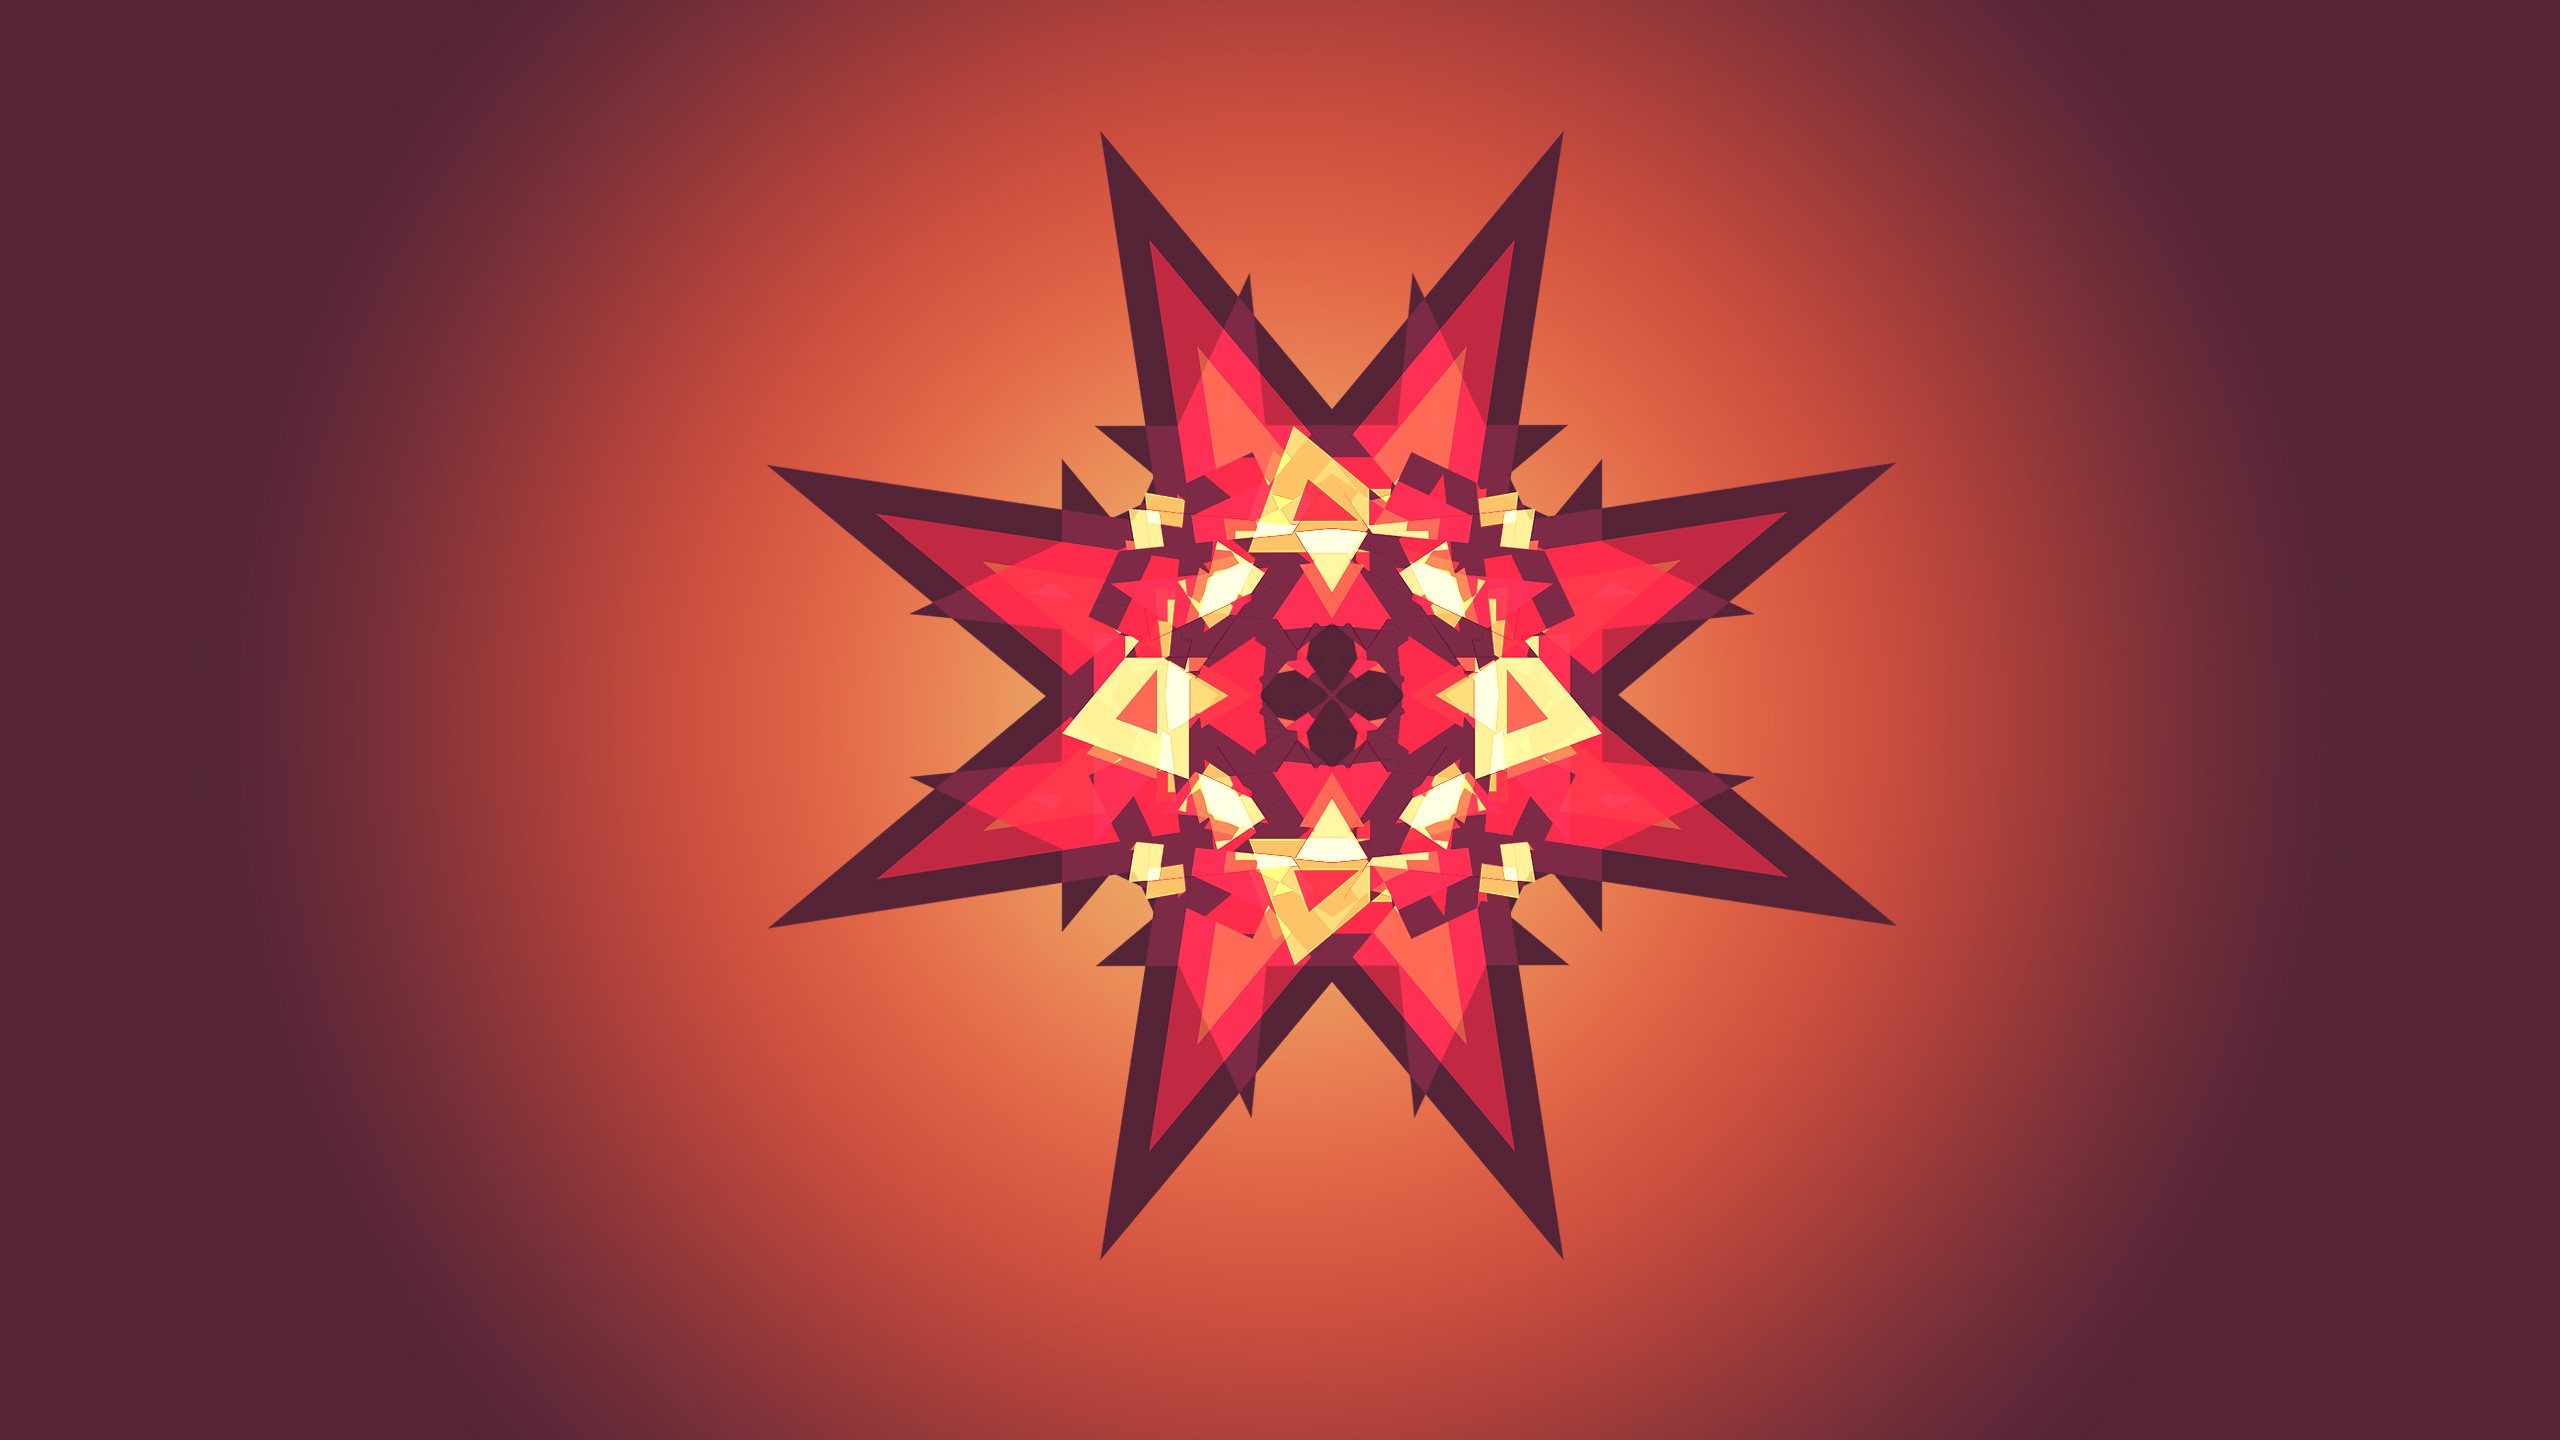 General 2560x1440 minimalism abstract gradient stars red orange digital art